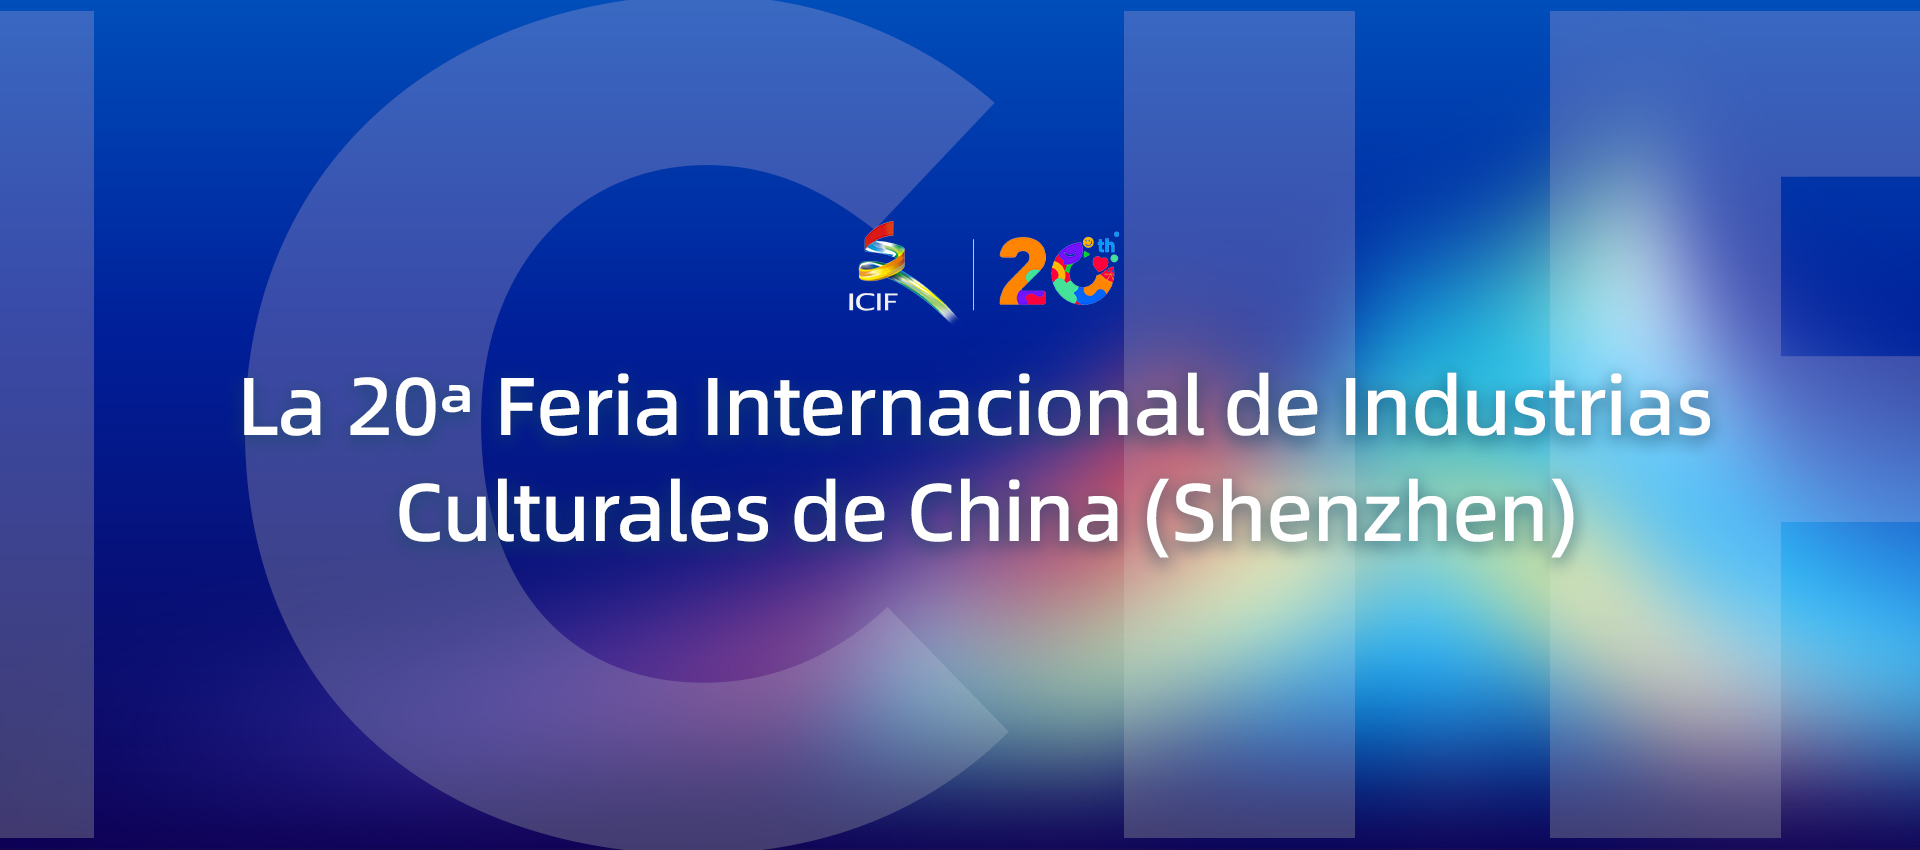 La 20ª Feria Internacional de Industrias Culturales de China (Shenzhen)